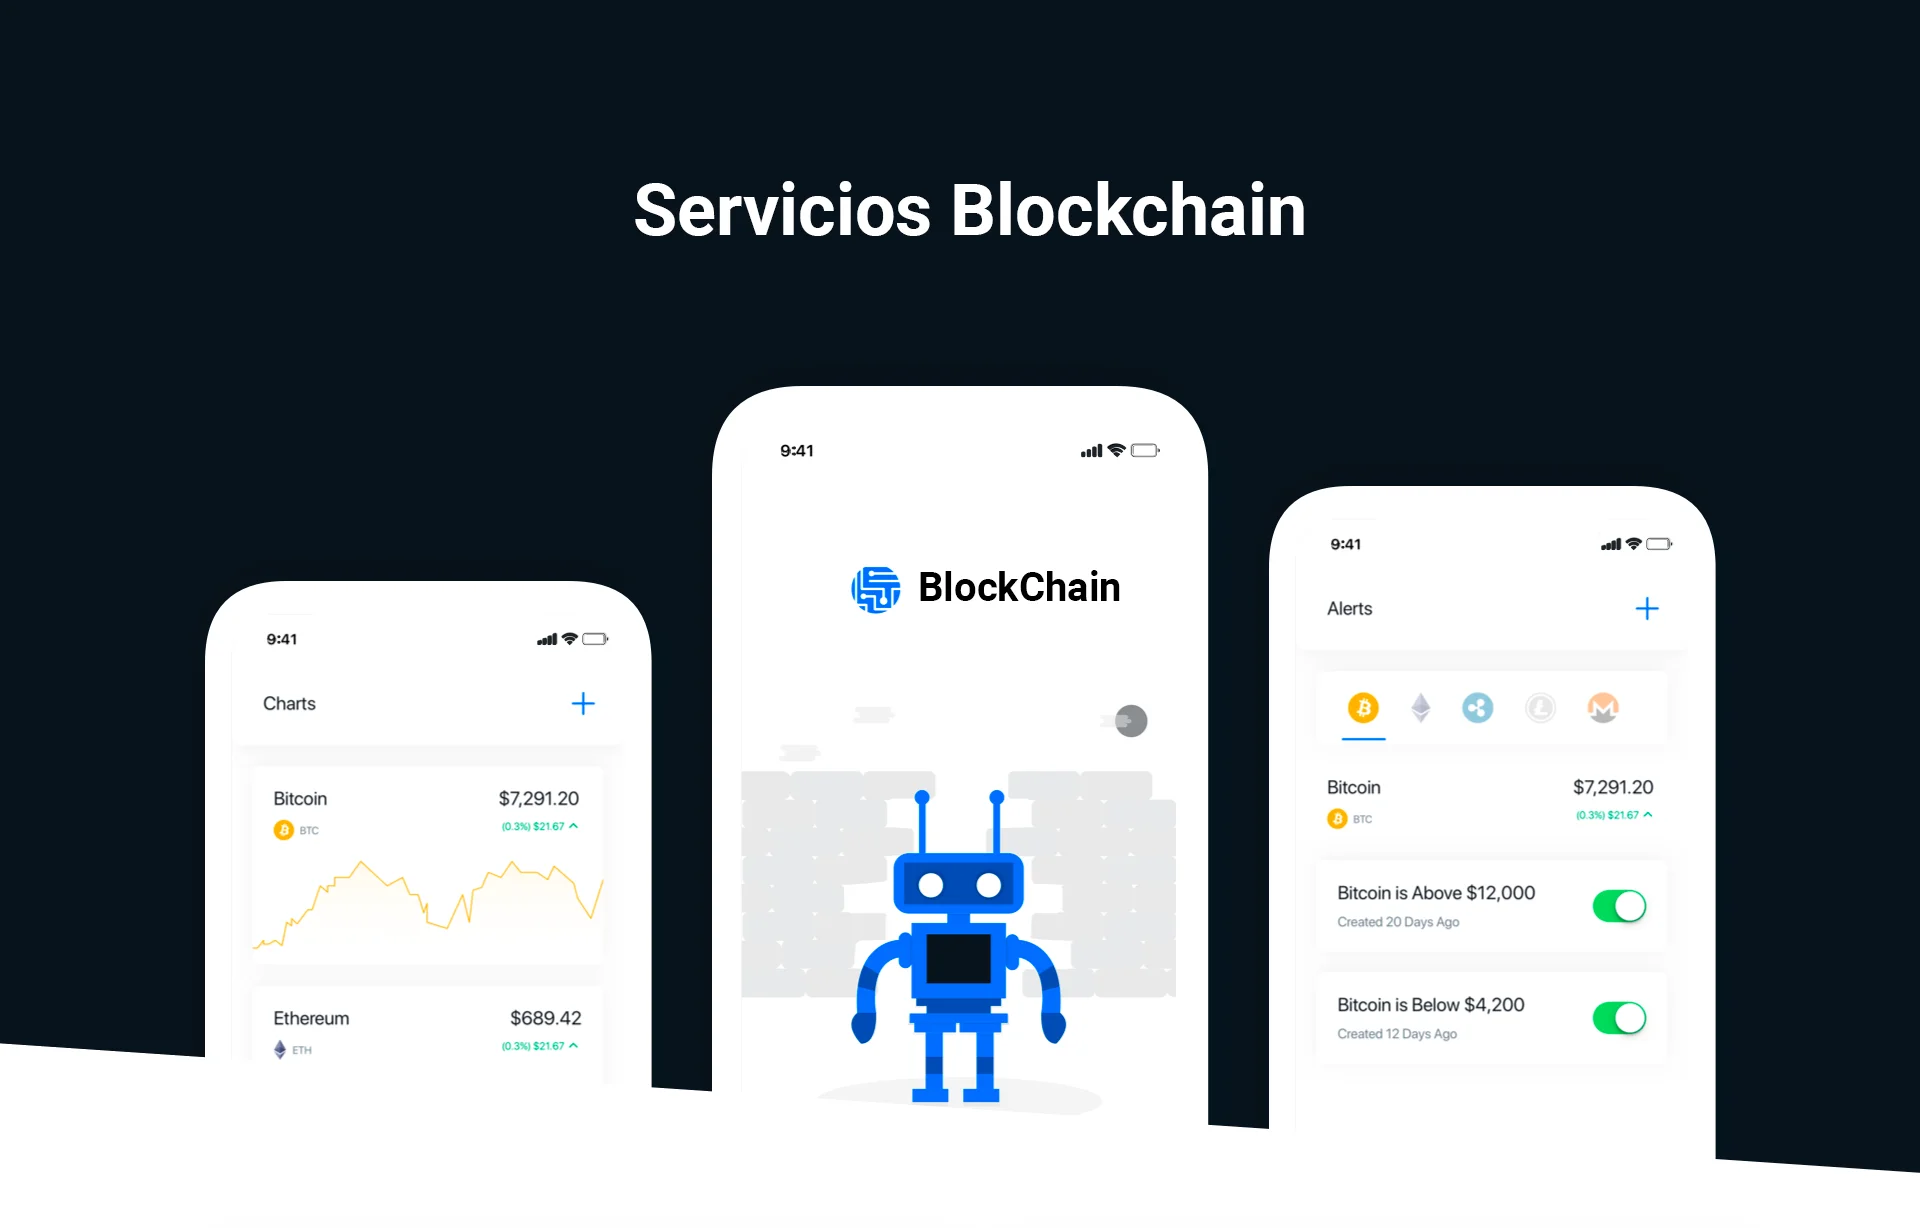 Servicios Blockchain